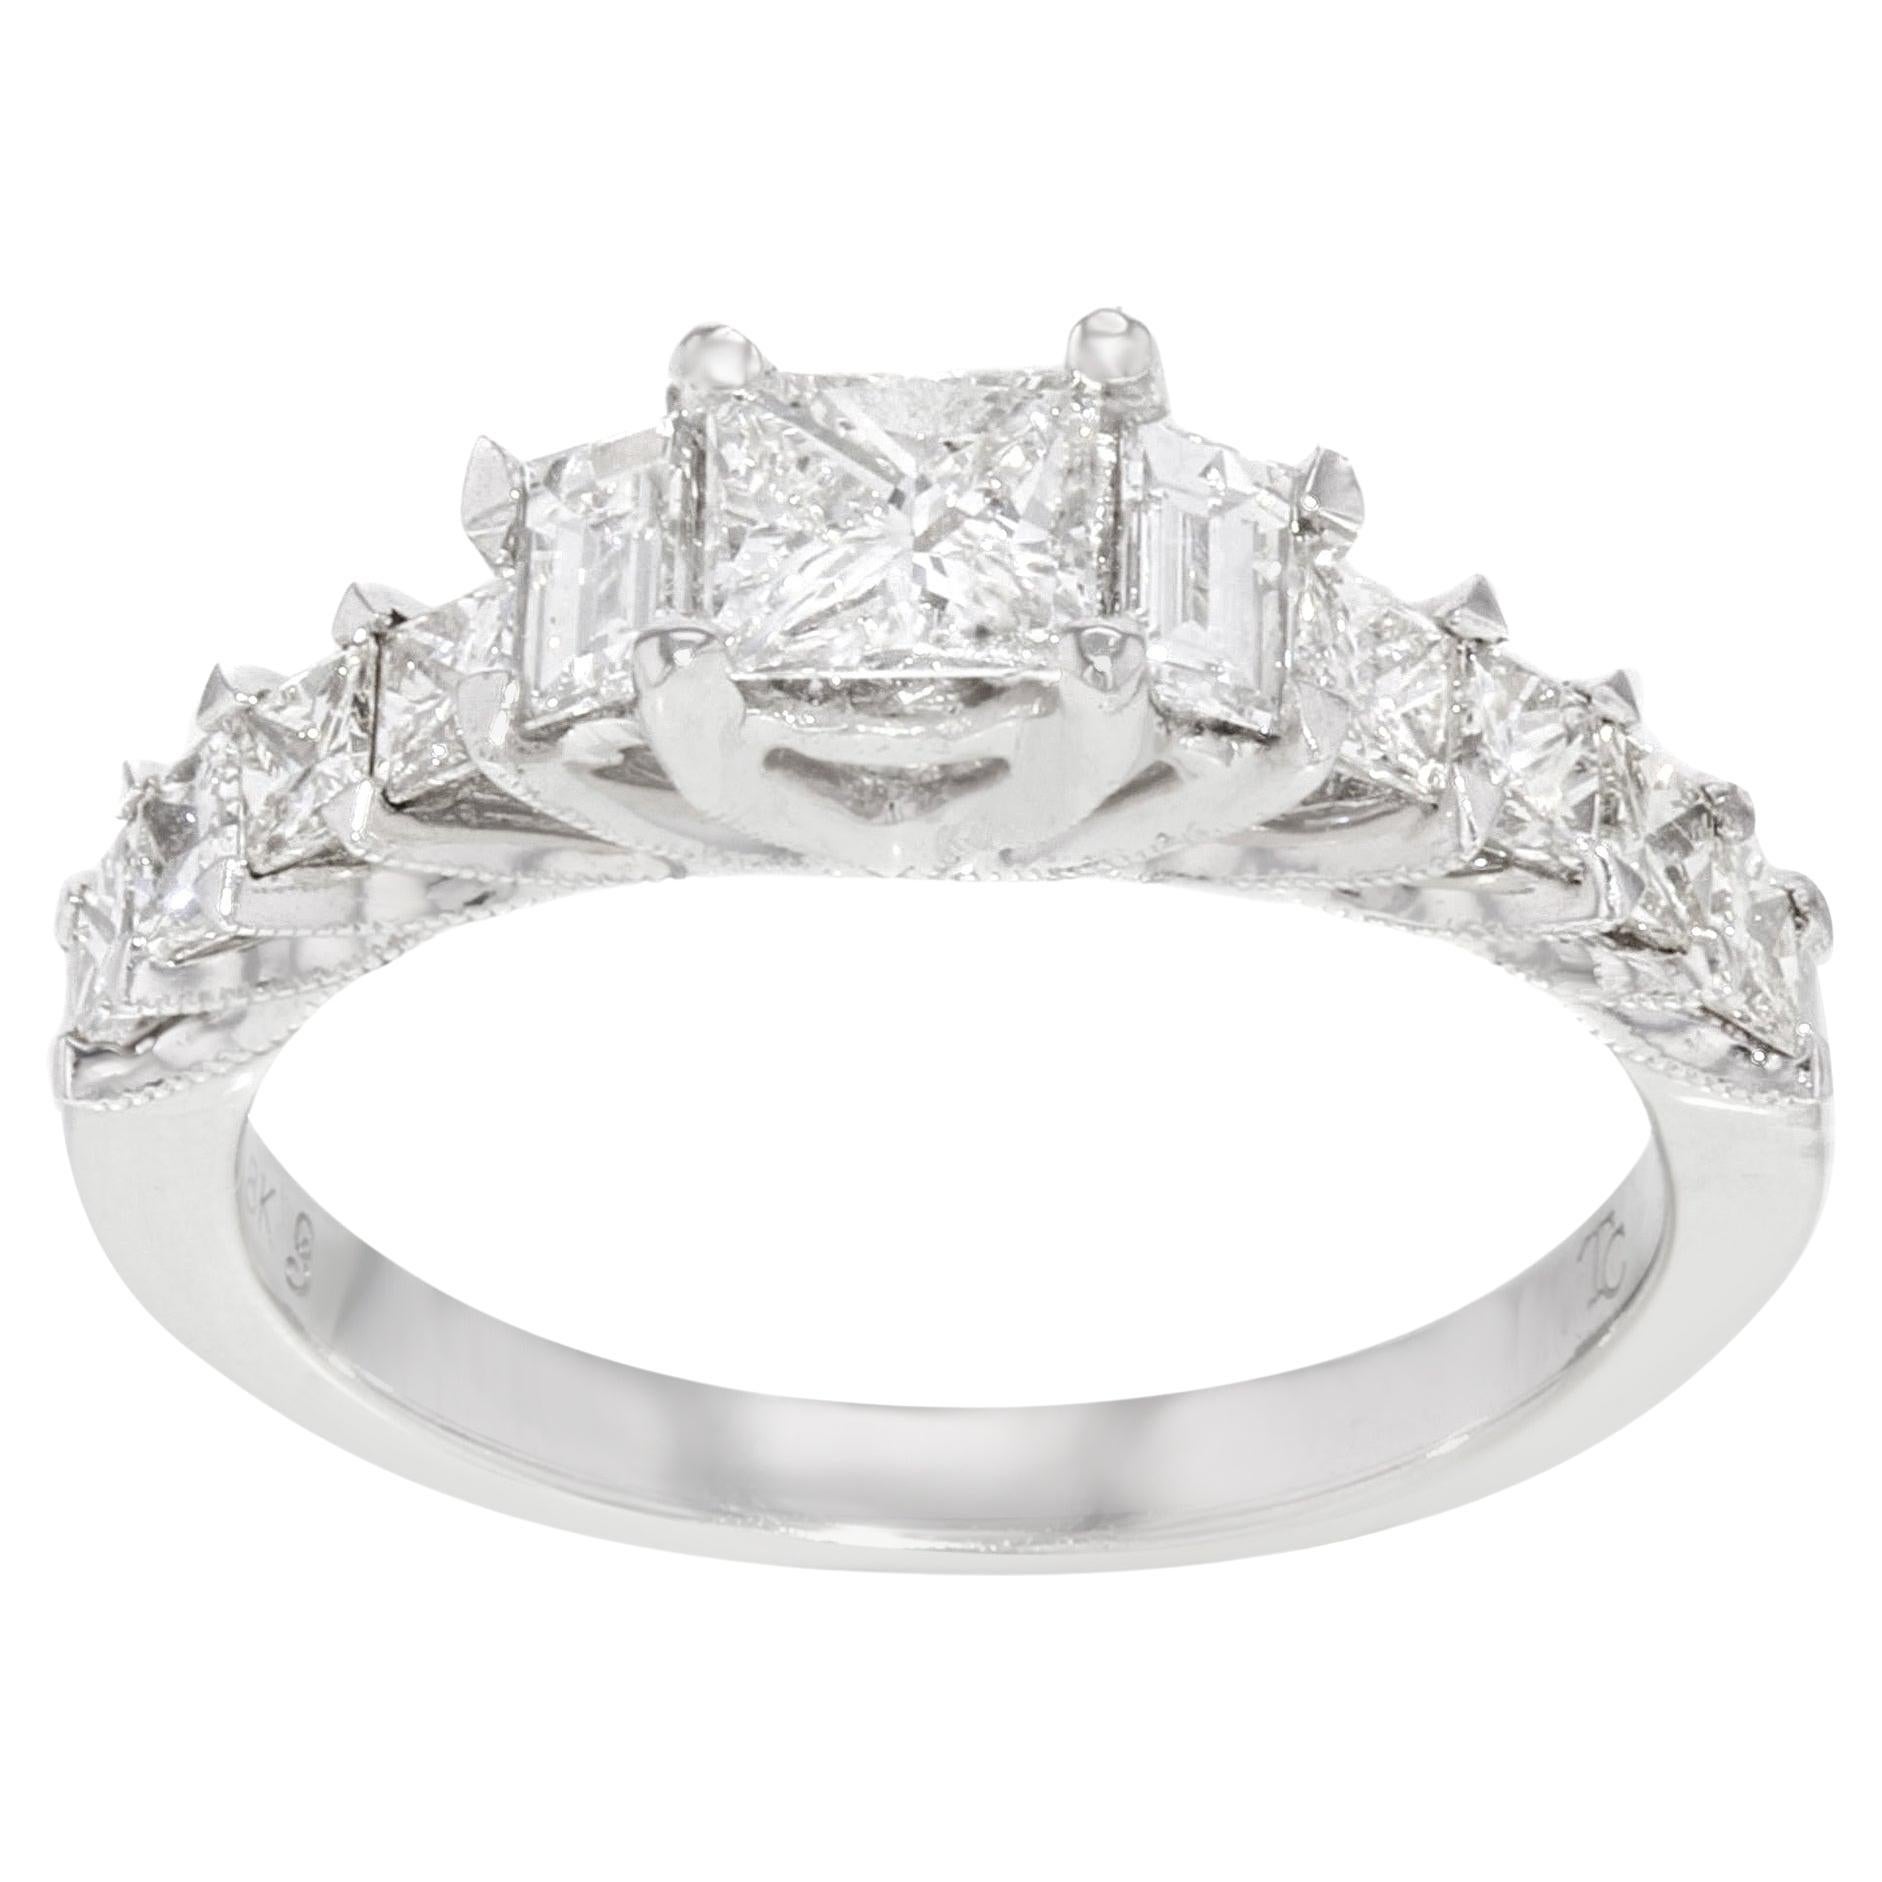 Rachel Koen Princess Baguette Cut Diamond Ring 18k White Gold 1.25cttw For Sale